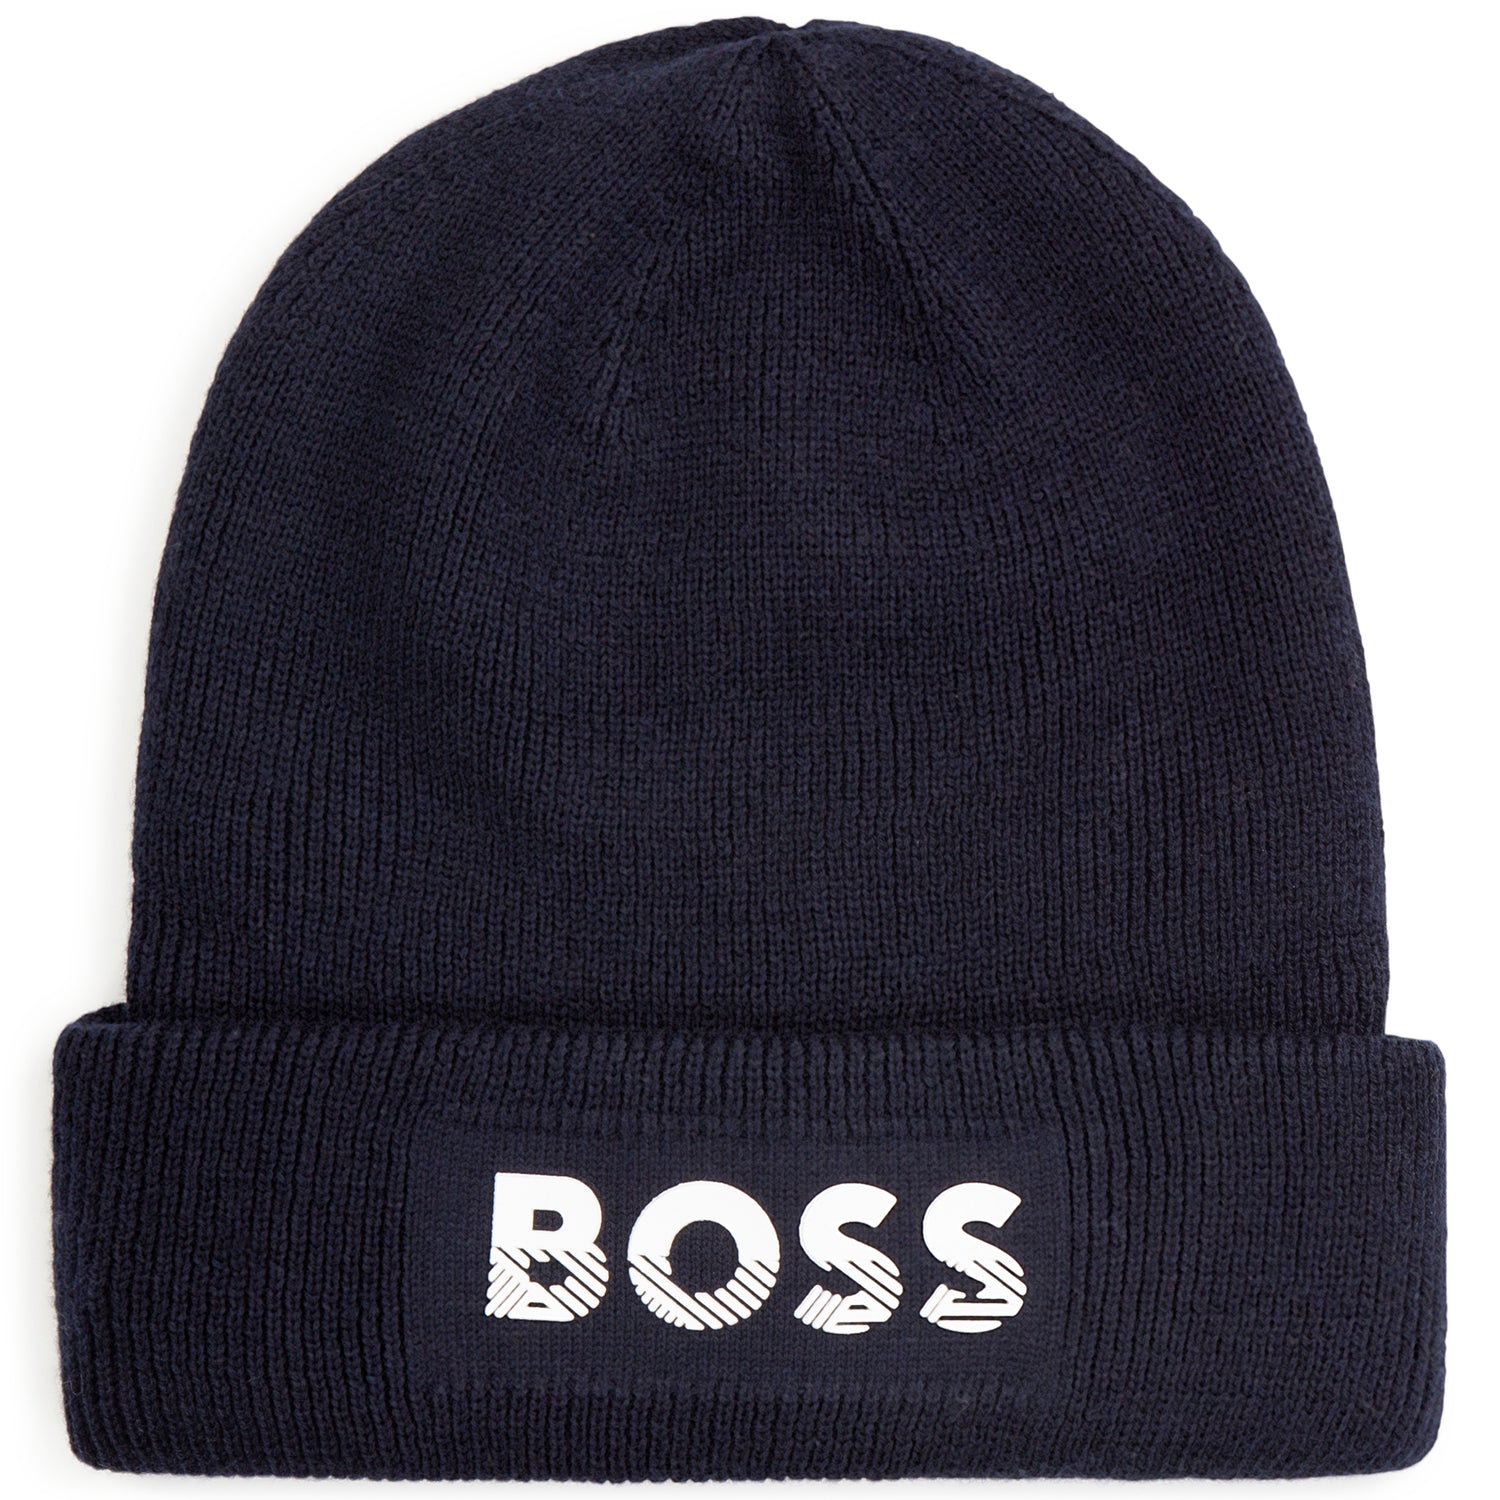 Boss Pull On Hat Style: J21258